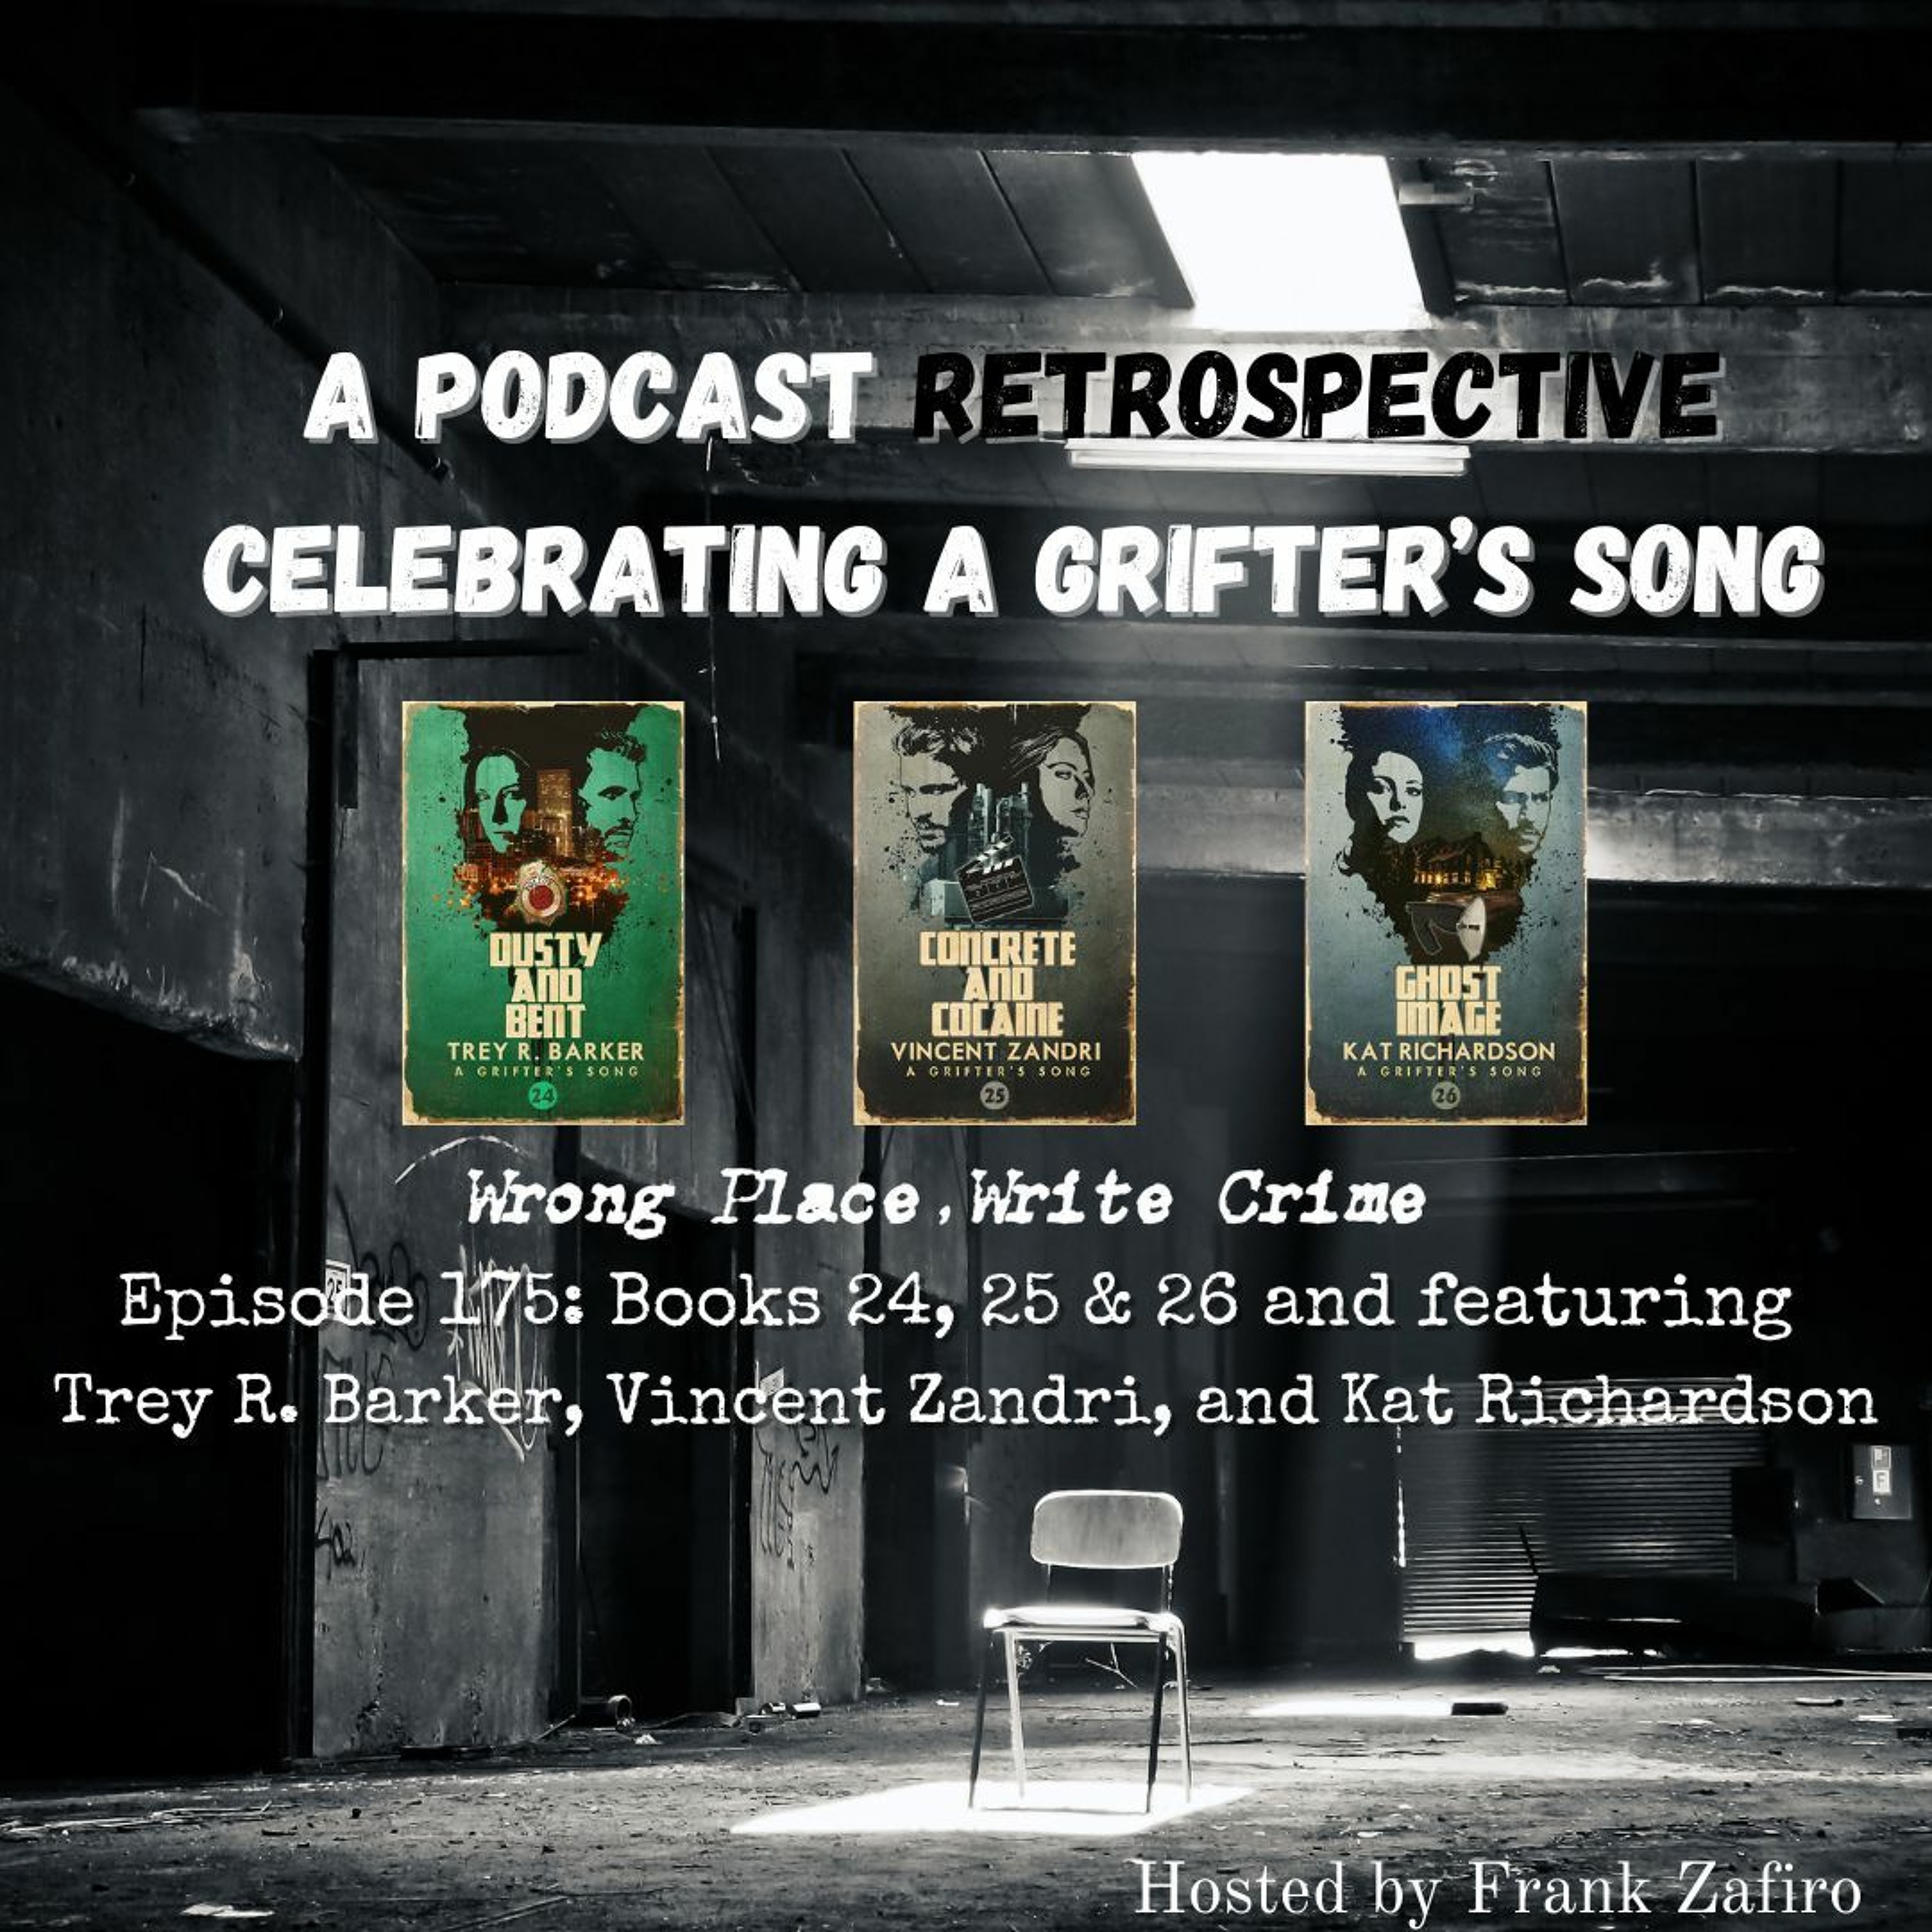 Episode 175: A Grifter’s Song Retropective #9 - Books 24, 25 & 26